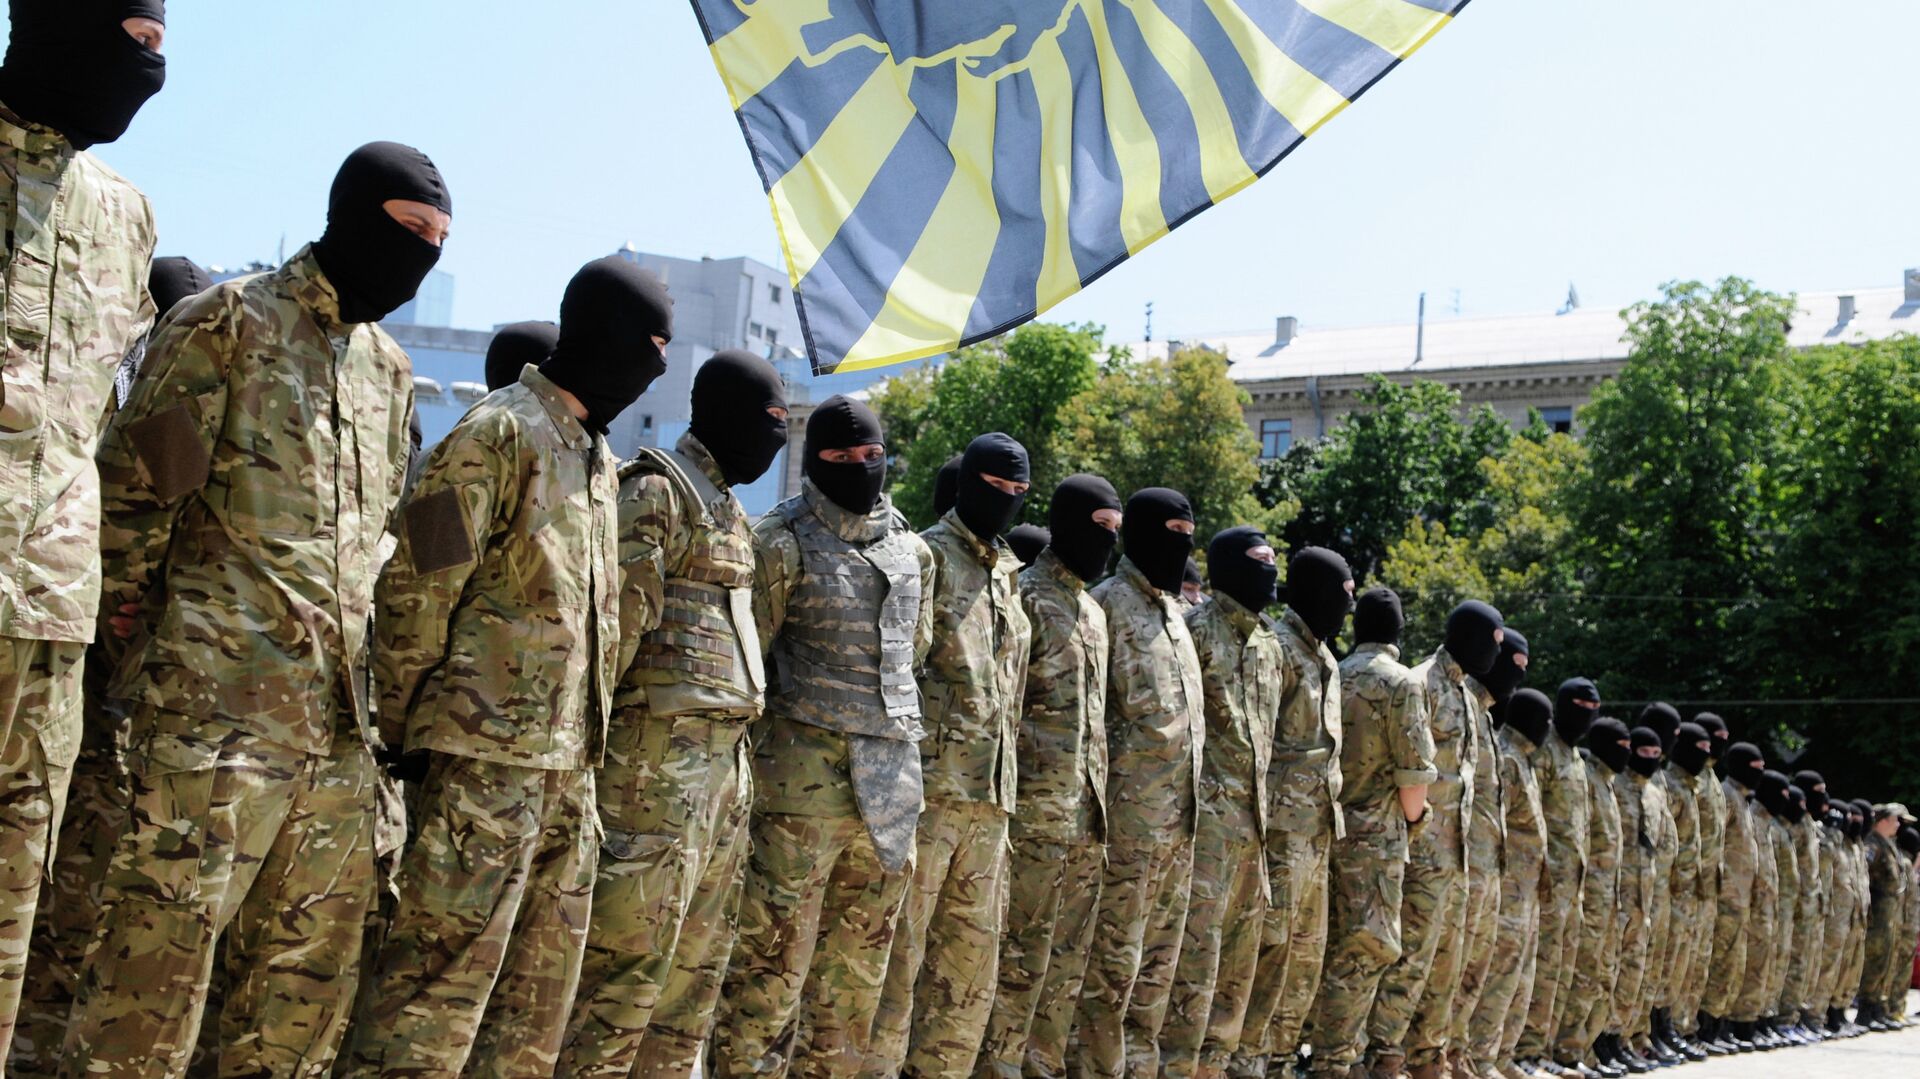 Azov battalion soldiers take oath in Kiev before being sent to Donbass - Sputnik International, 1920, 17.04.2022